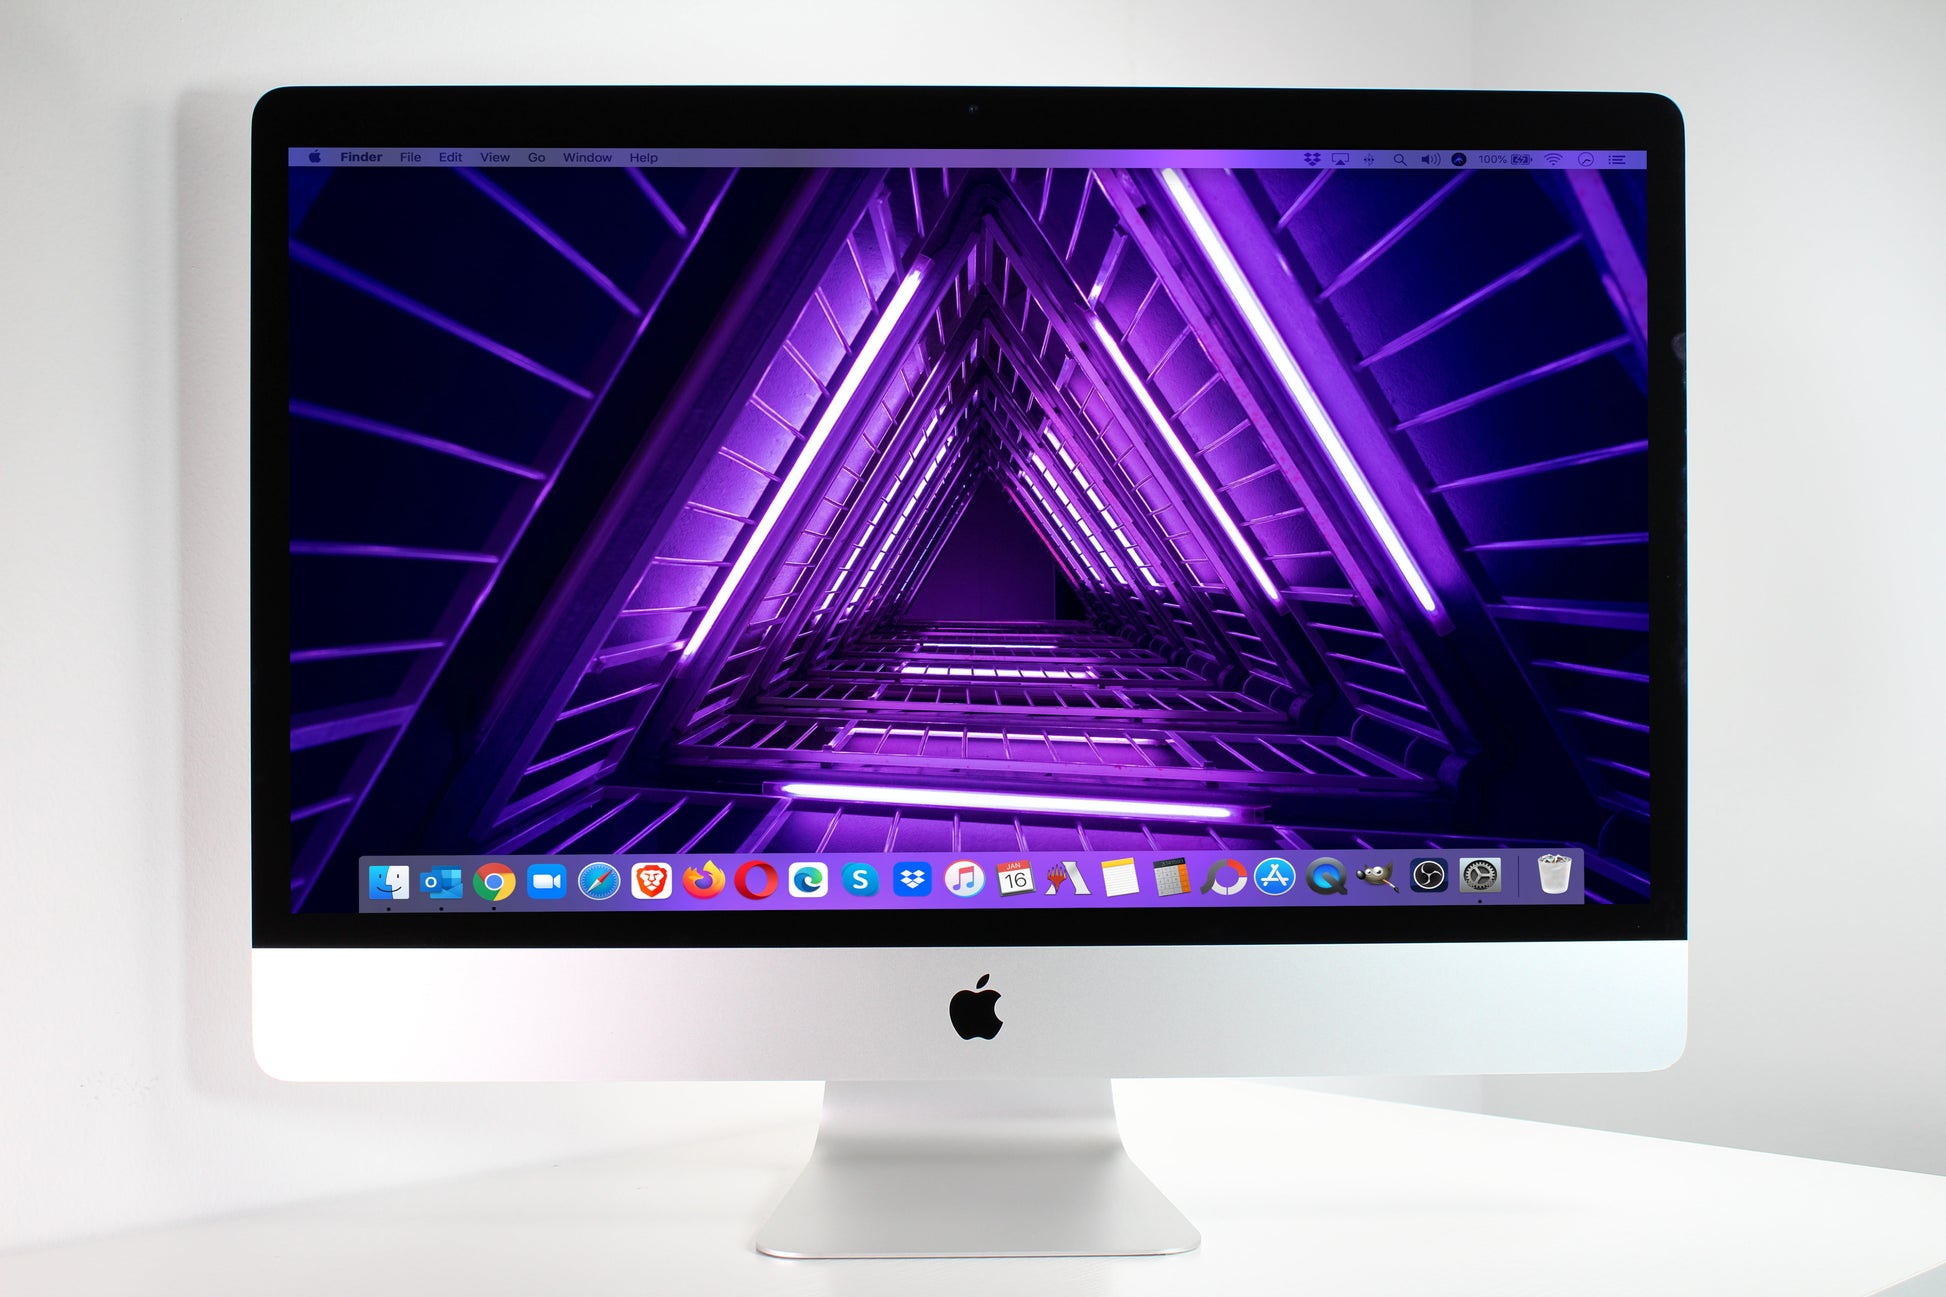 Apple iMac 5K 27-inch (Mid 2019) 3.6GHz i9 512GB SSD 32 GB RAM Desktop 580X GPU